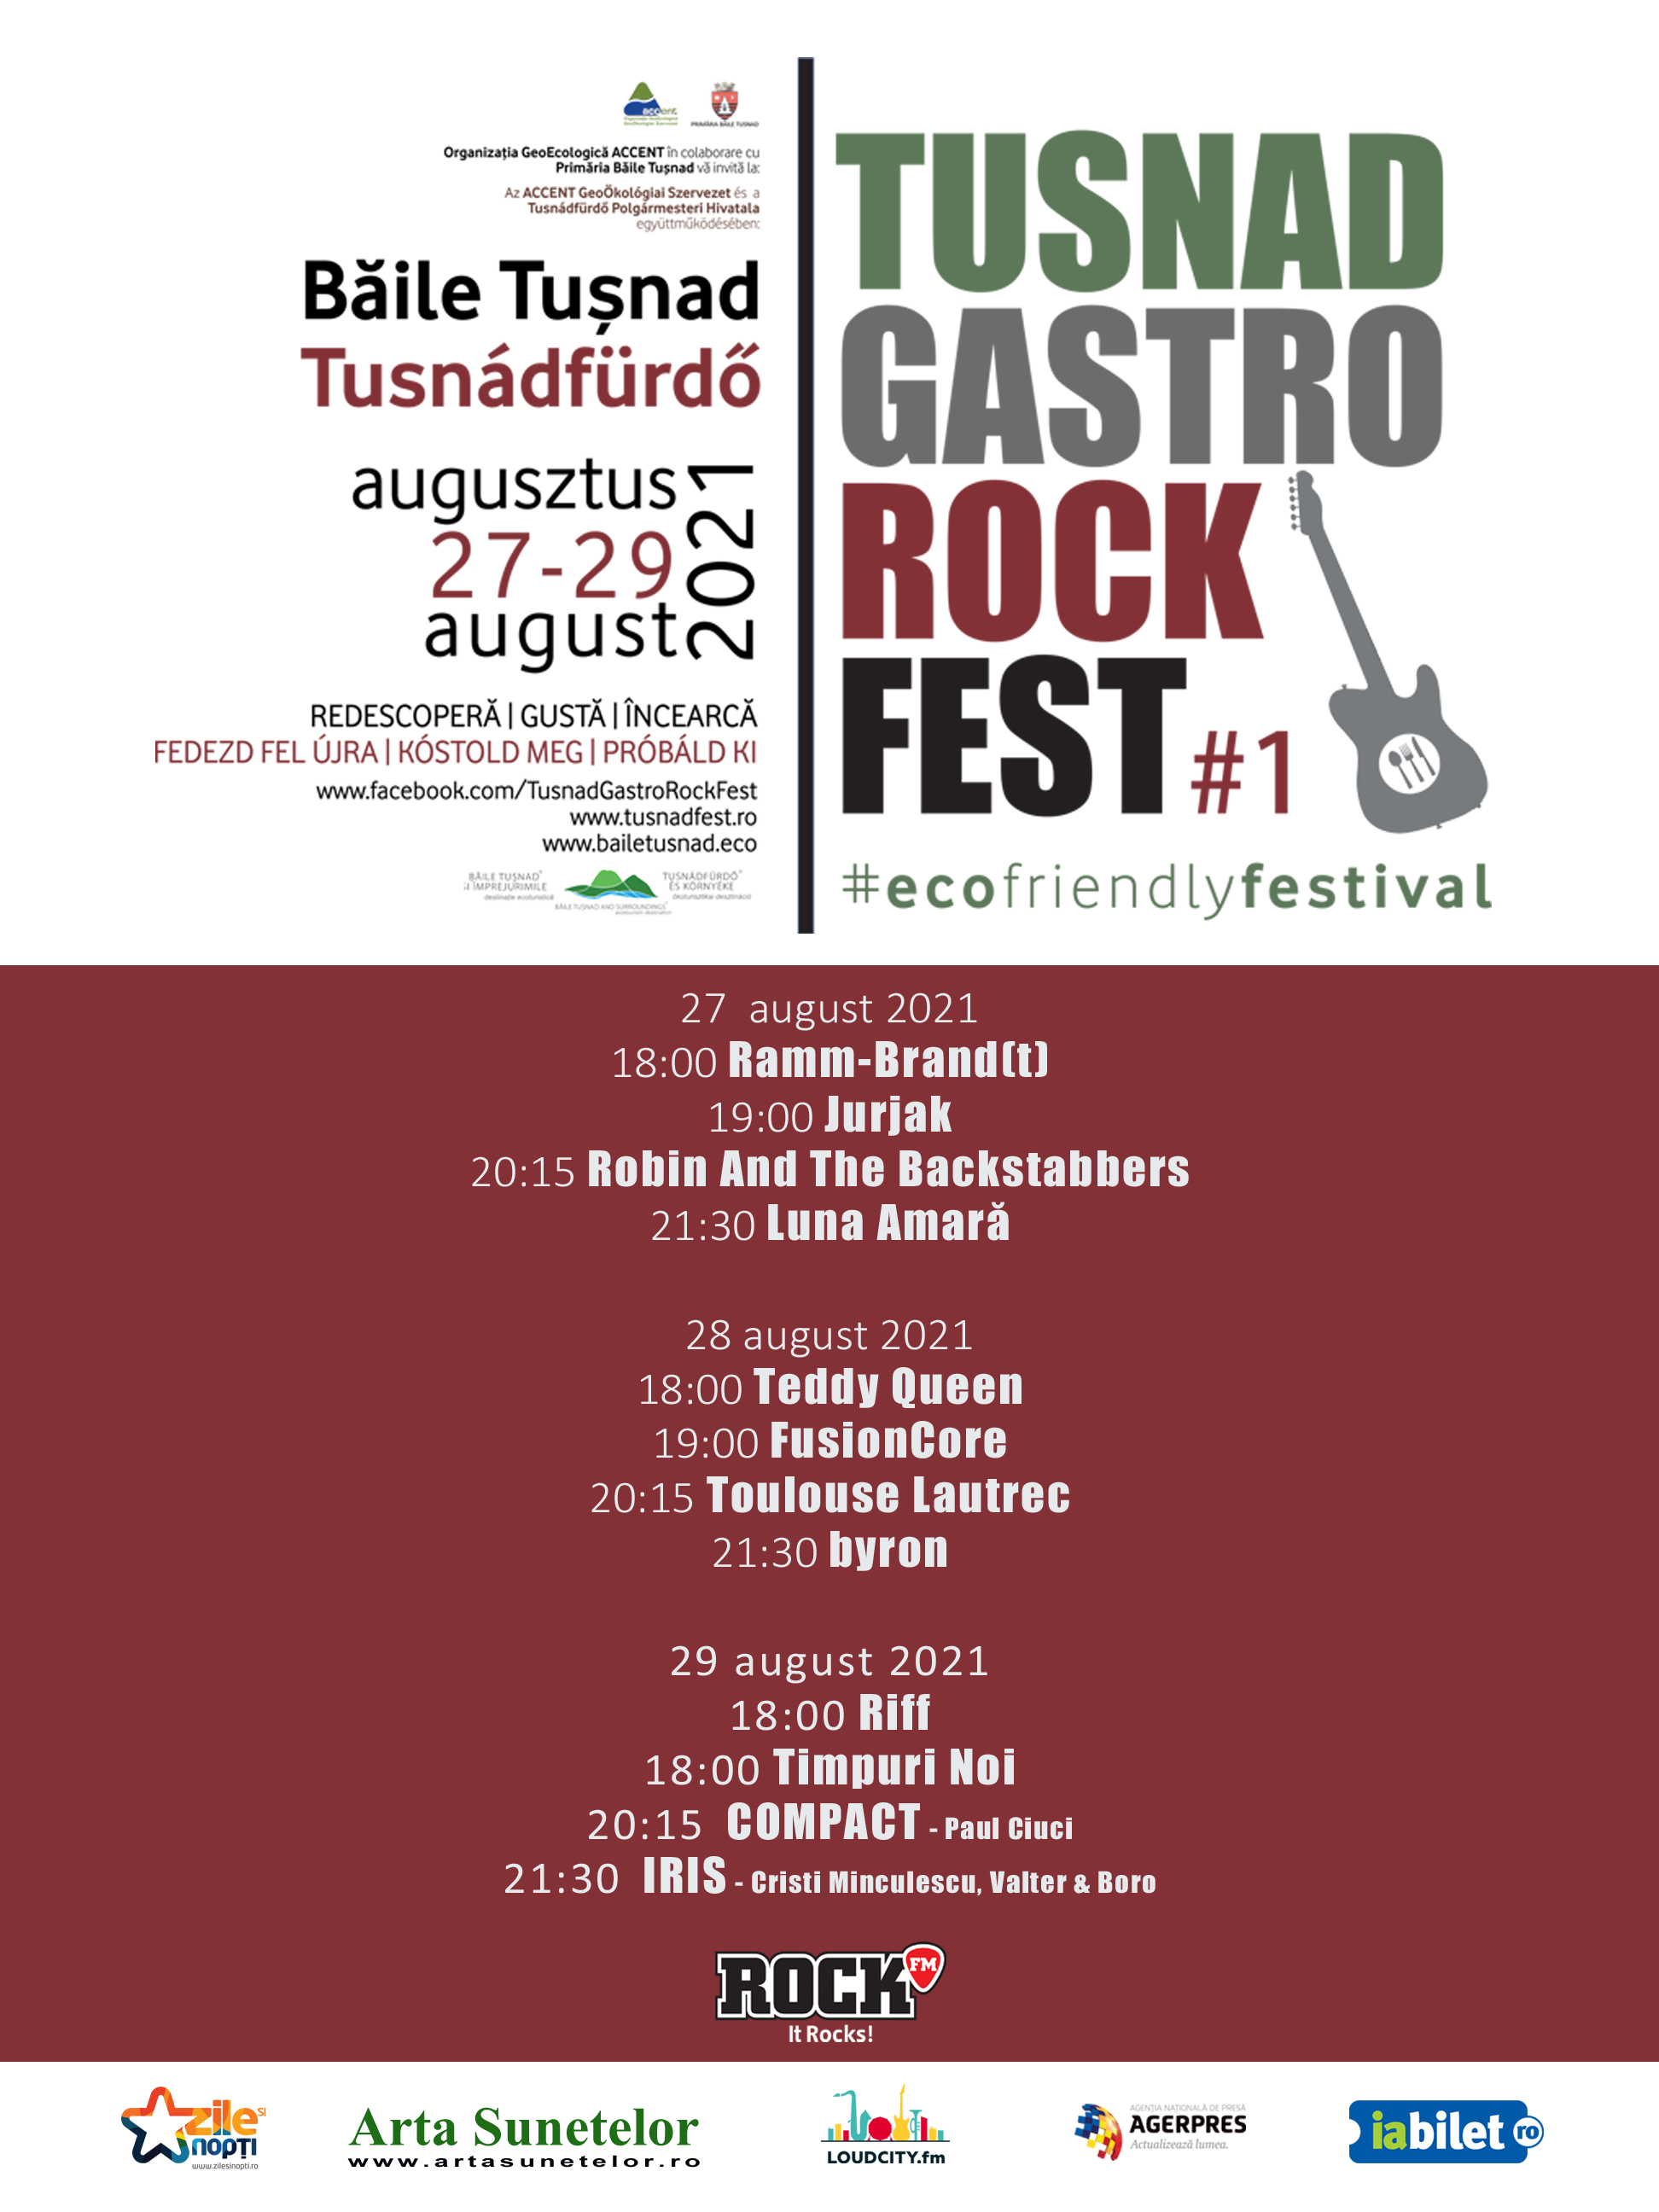 TUSNAD GASTRO ROCK FEST - Contemporary-Establishment